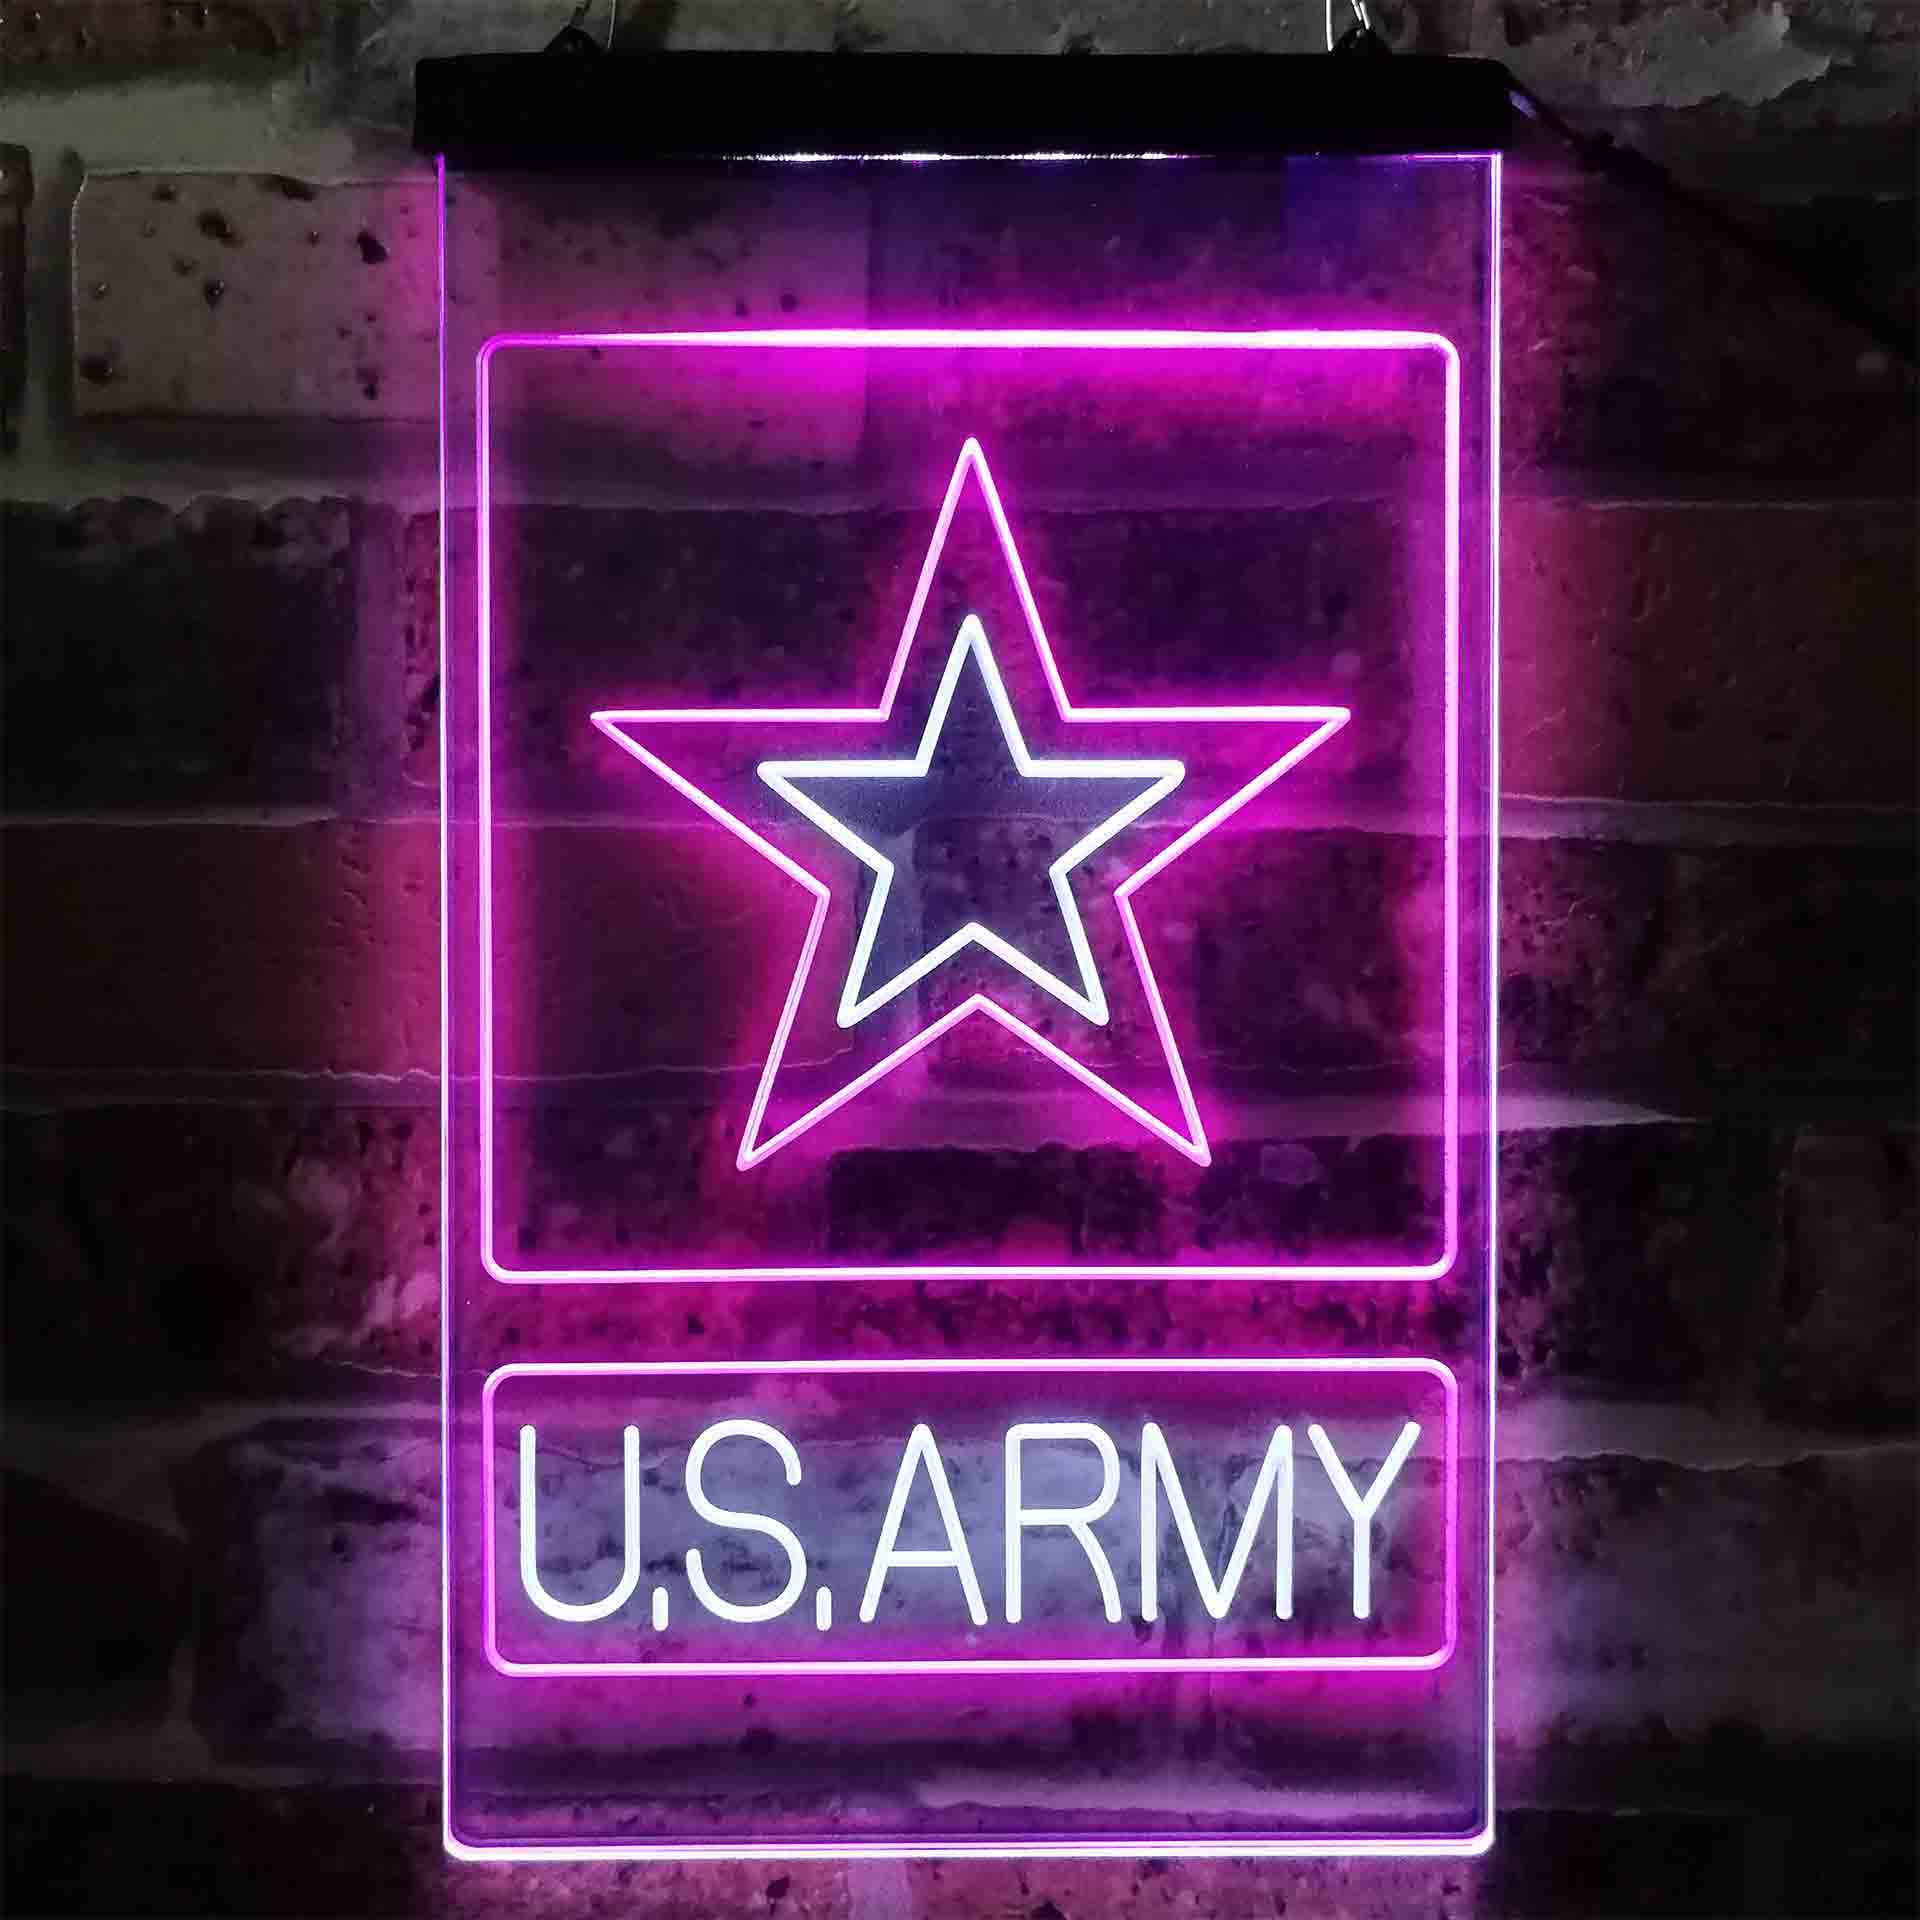 U.S. Army Star Neon-Like LED Sign